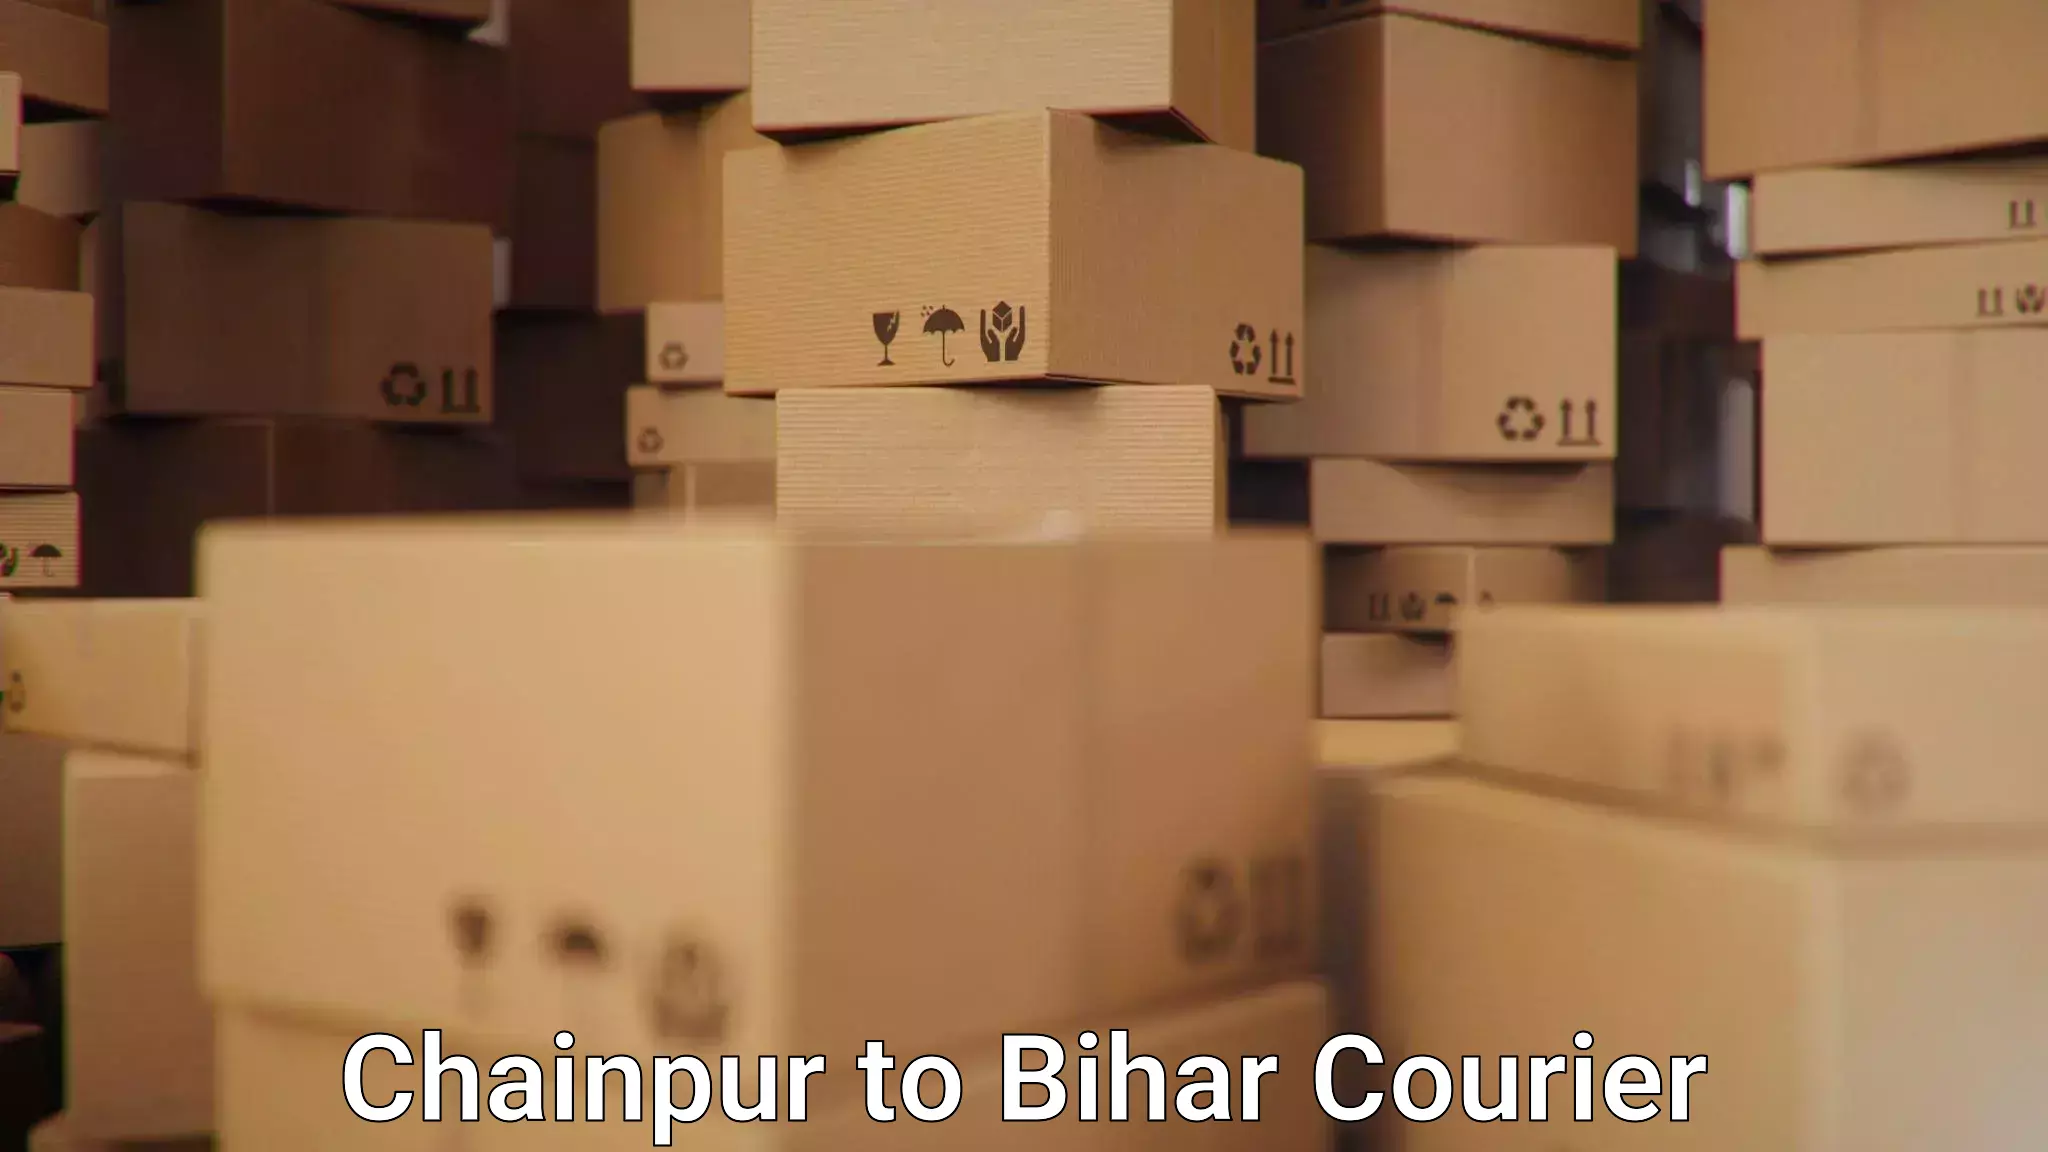 Smart shipping technology Chainpur to Marhowrah